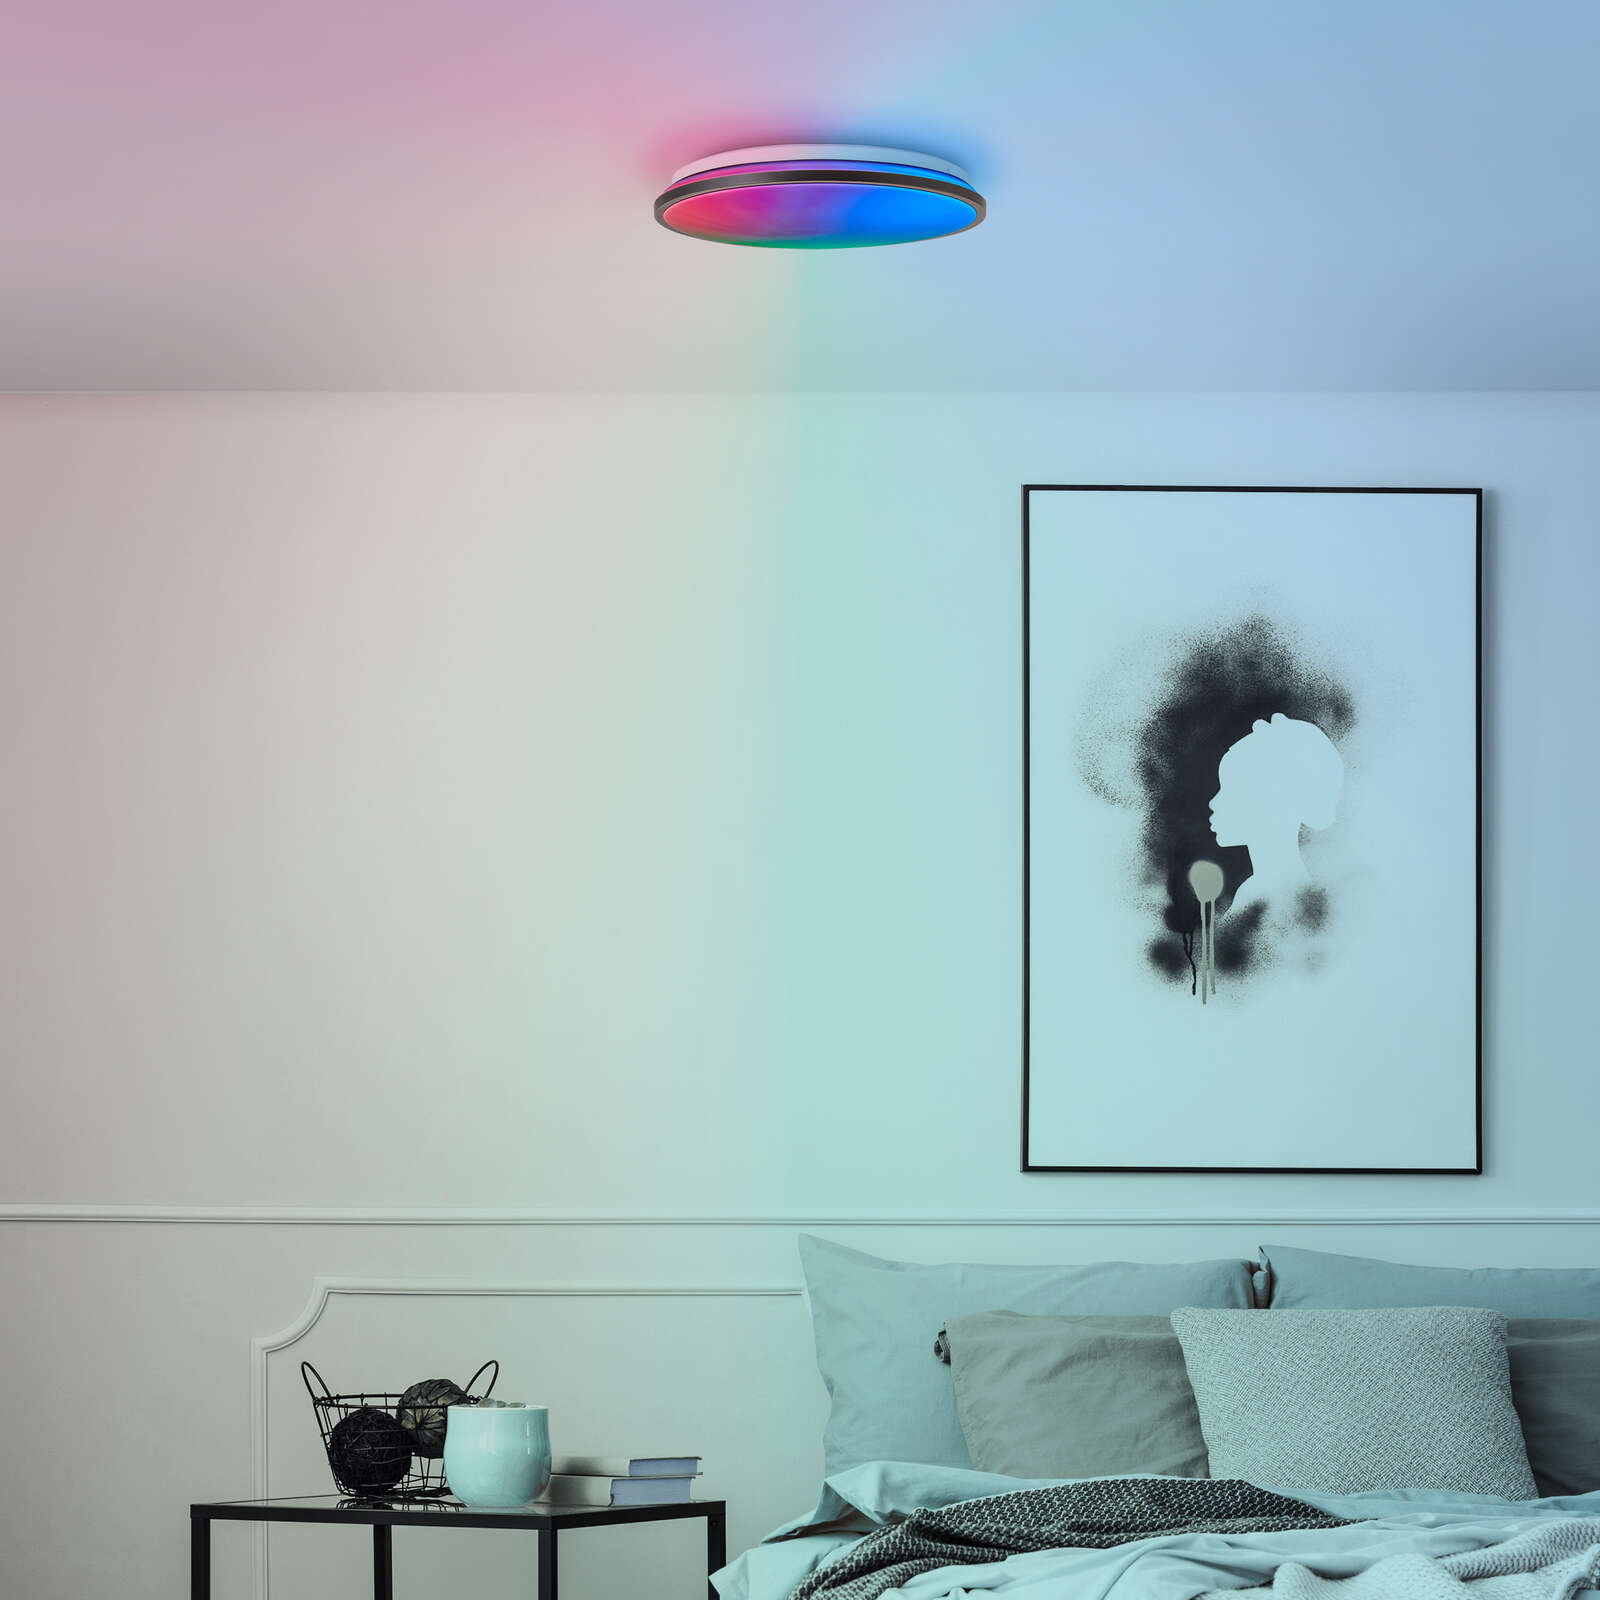             Kunststof plafondlamp - Iva 1 - Zwart
        